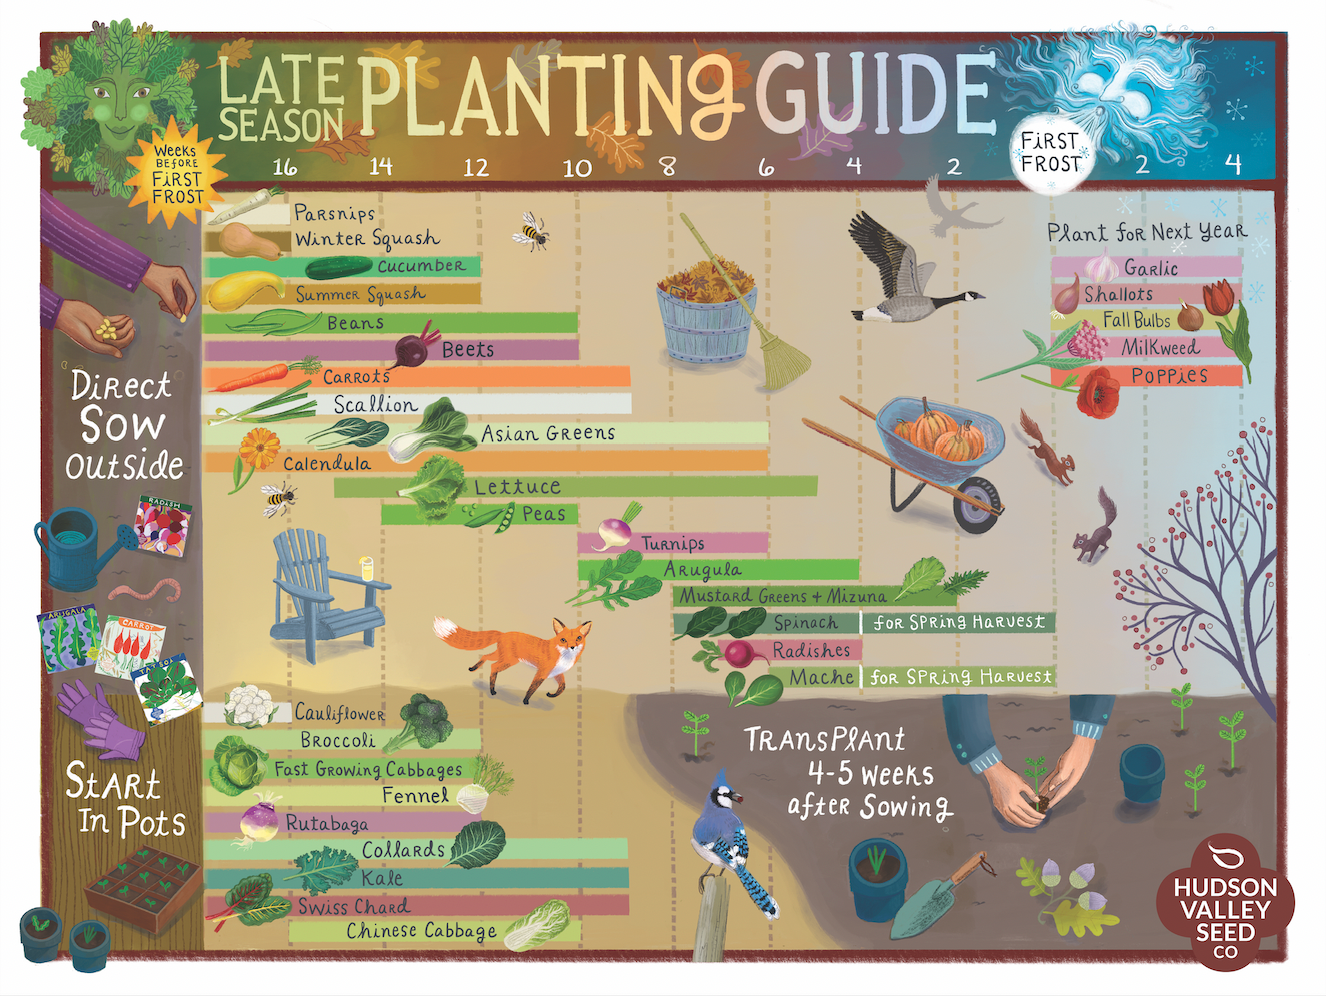 Late Season Planting Guide